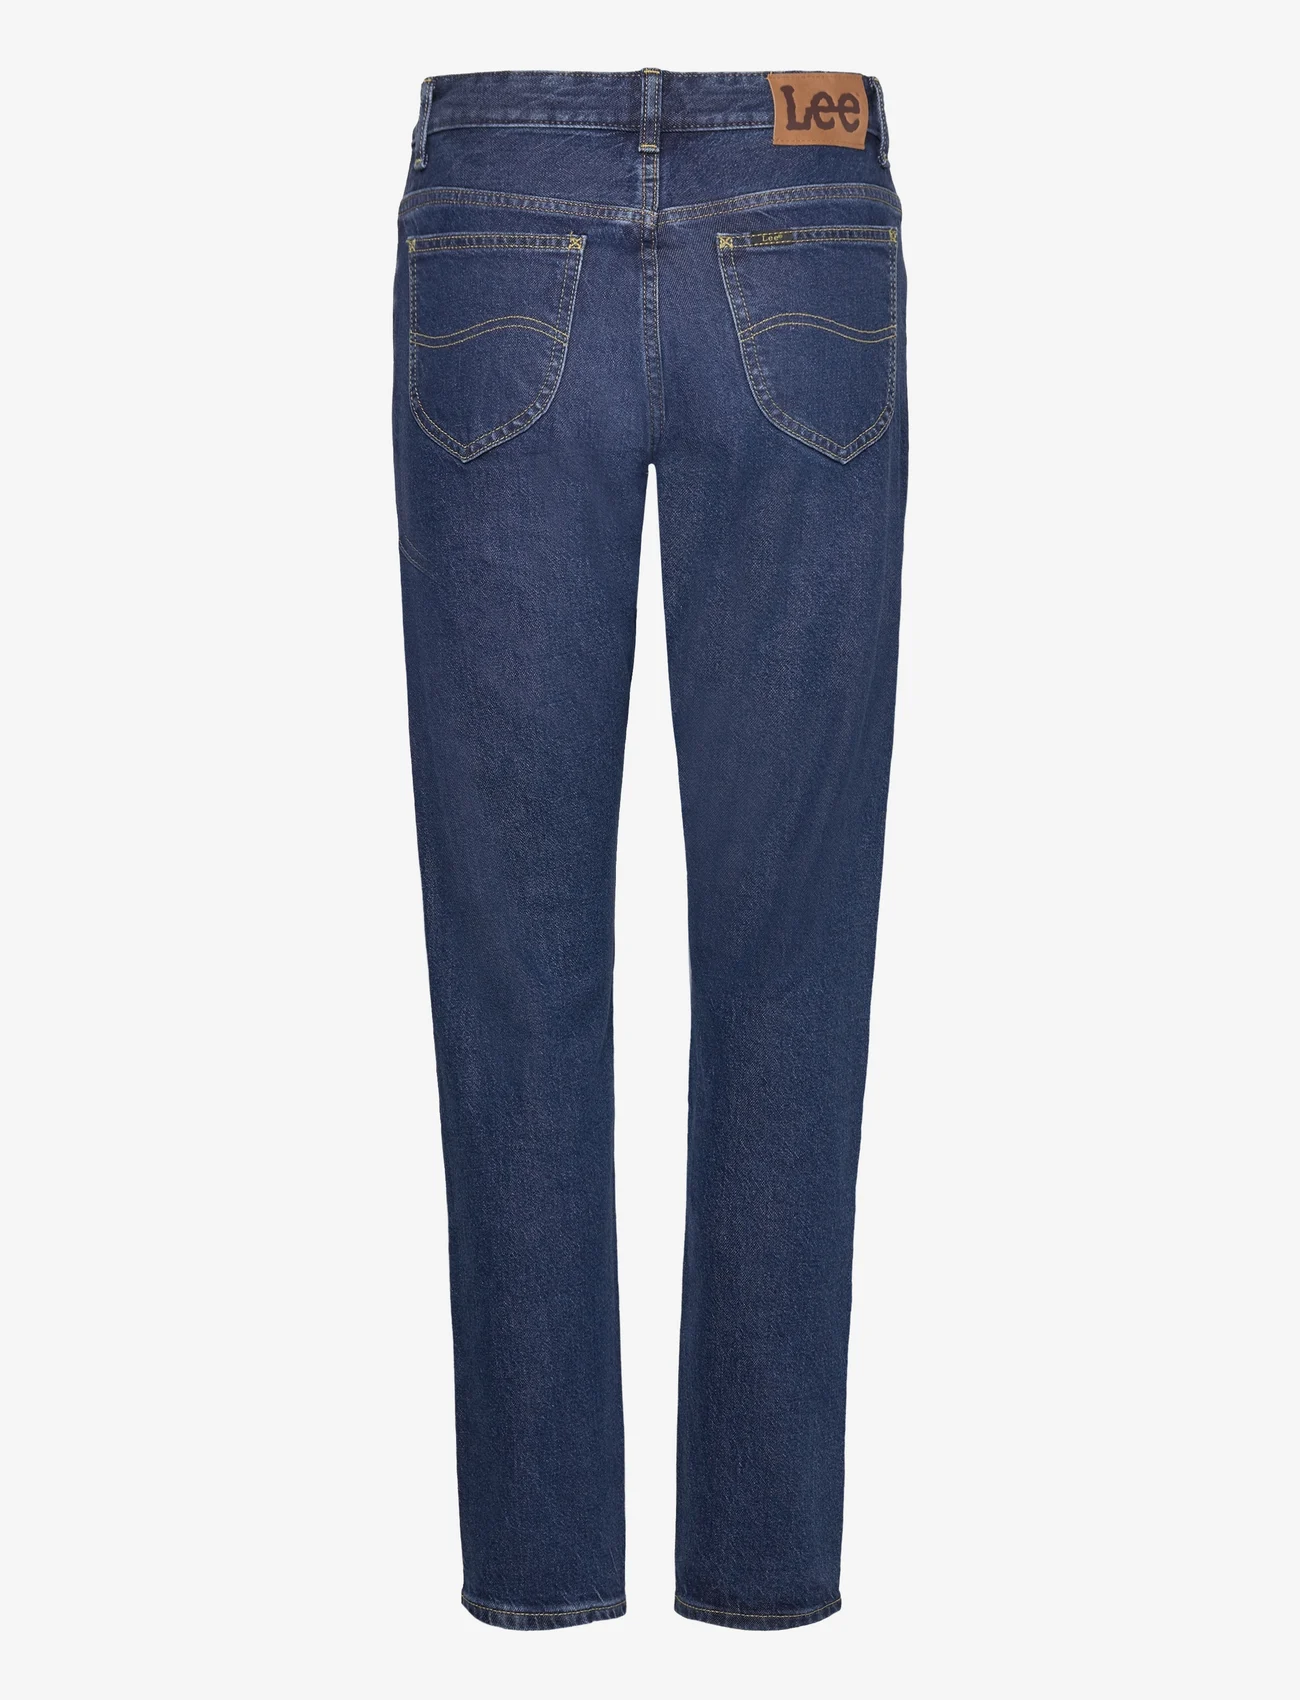 Lee Jeans - RIDER JEANS - slim jeans - blue nostalgia - 1